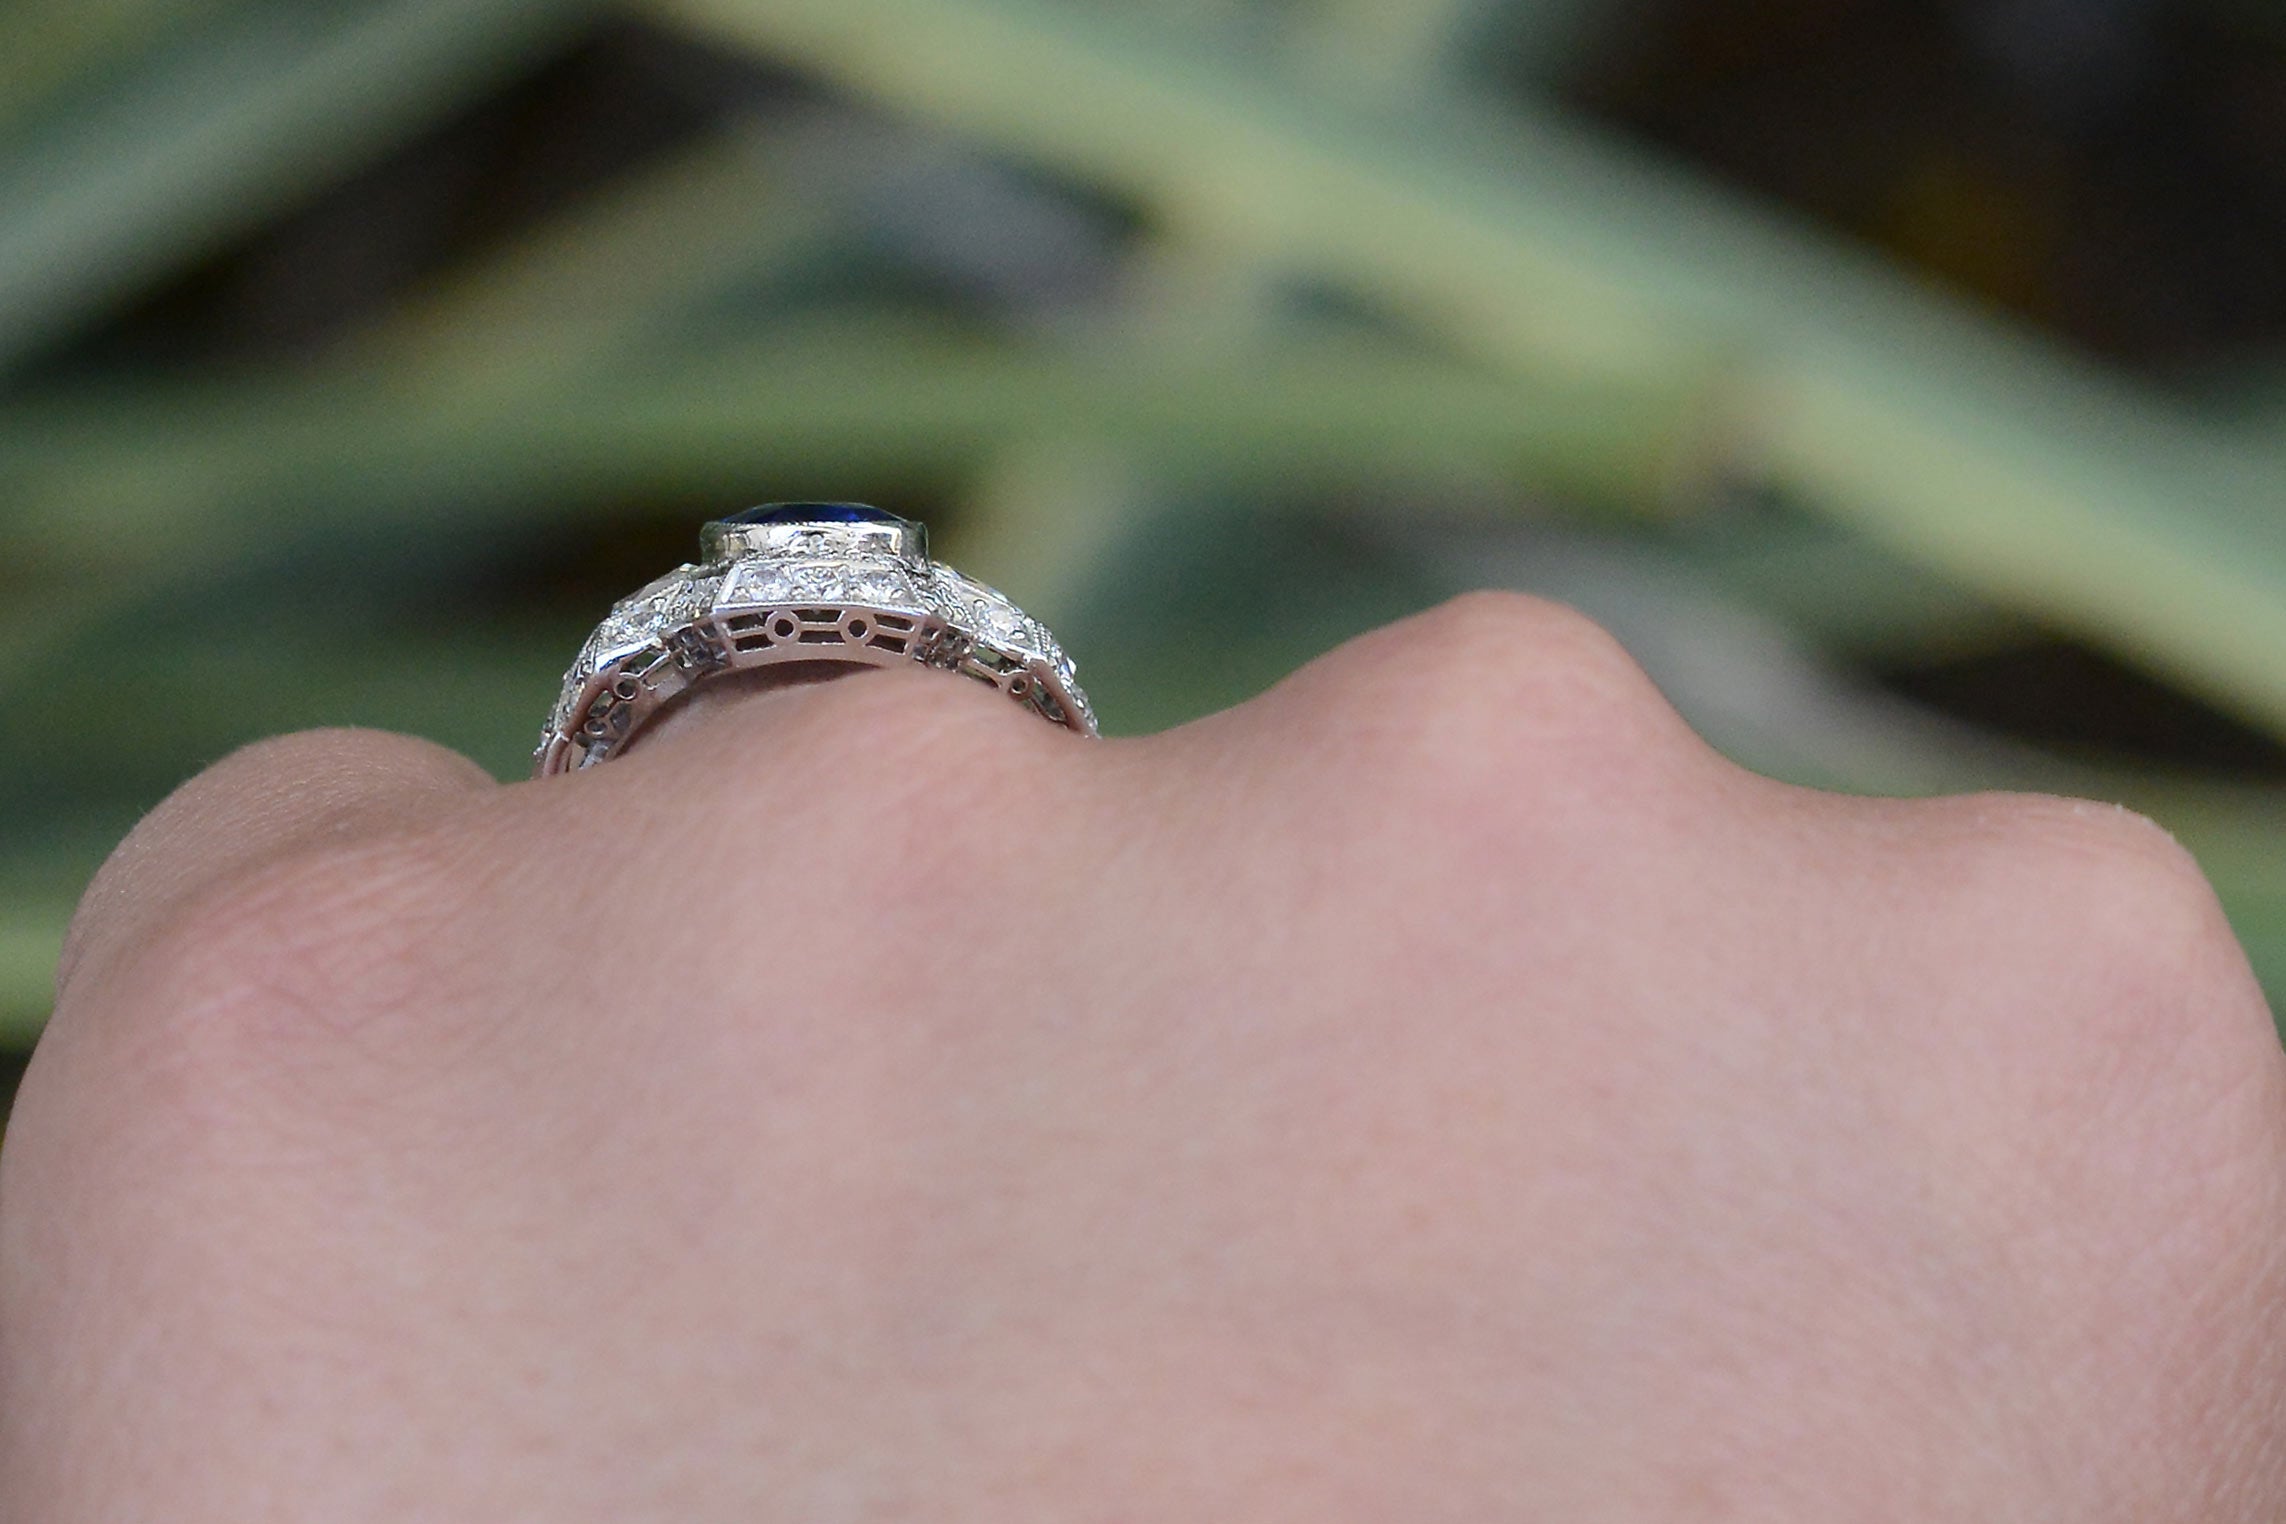 Belle Epoque Style Sapphire & Diamond Long Filigree Ring